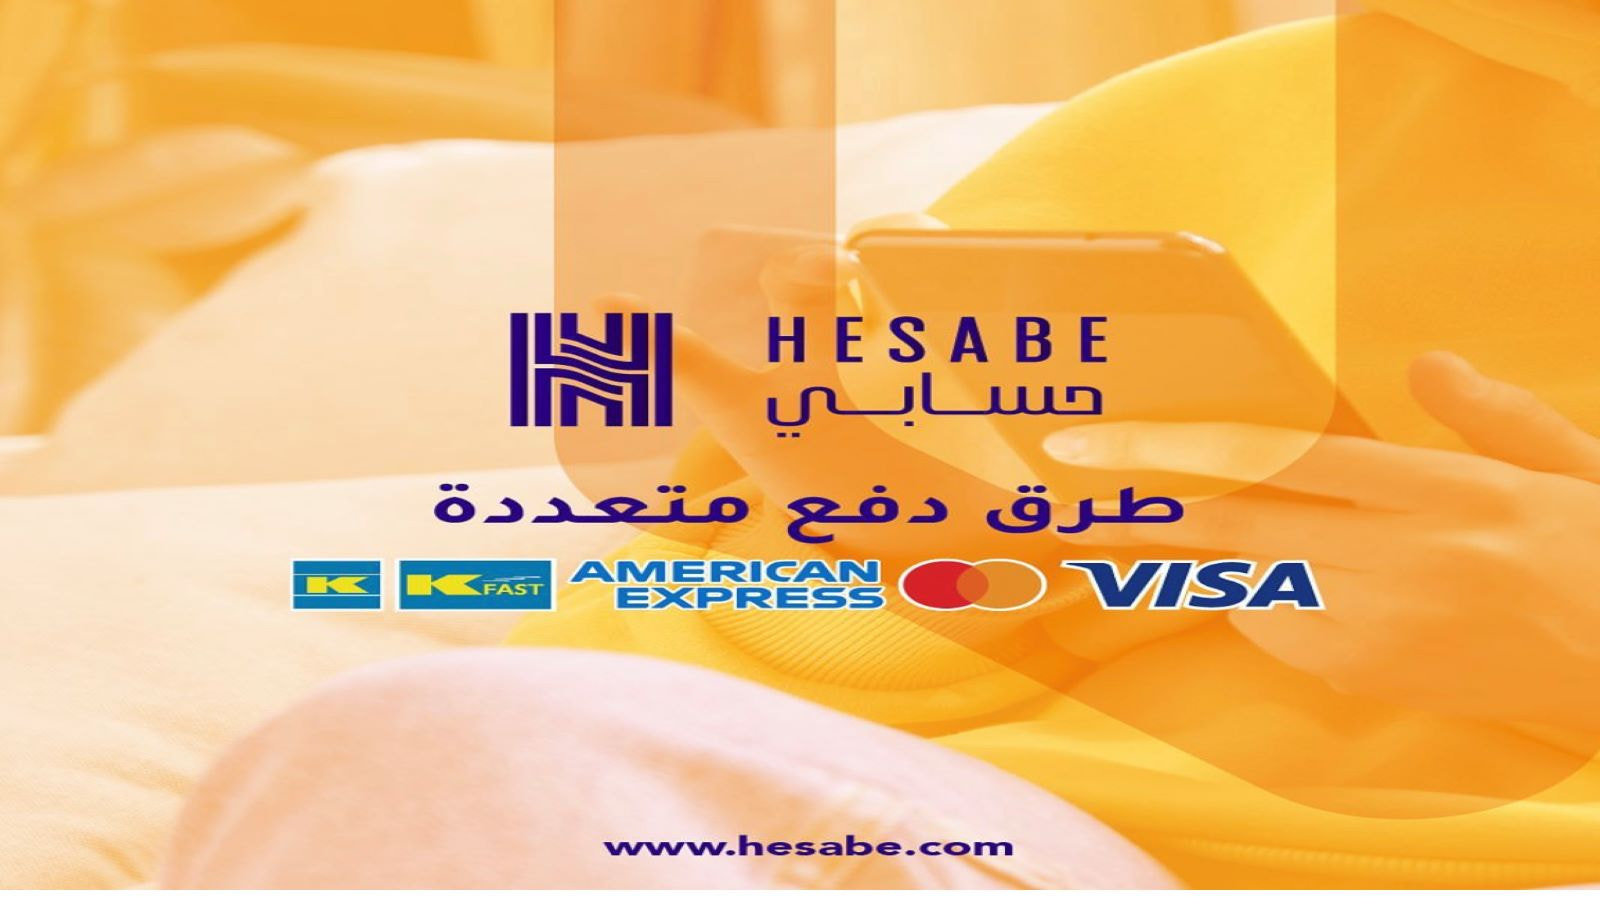 Hesabe提供的服务。